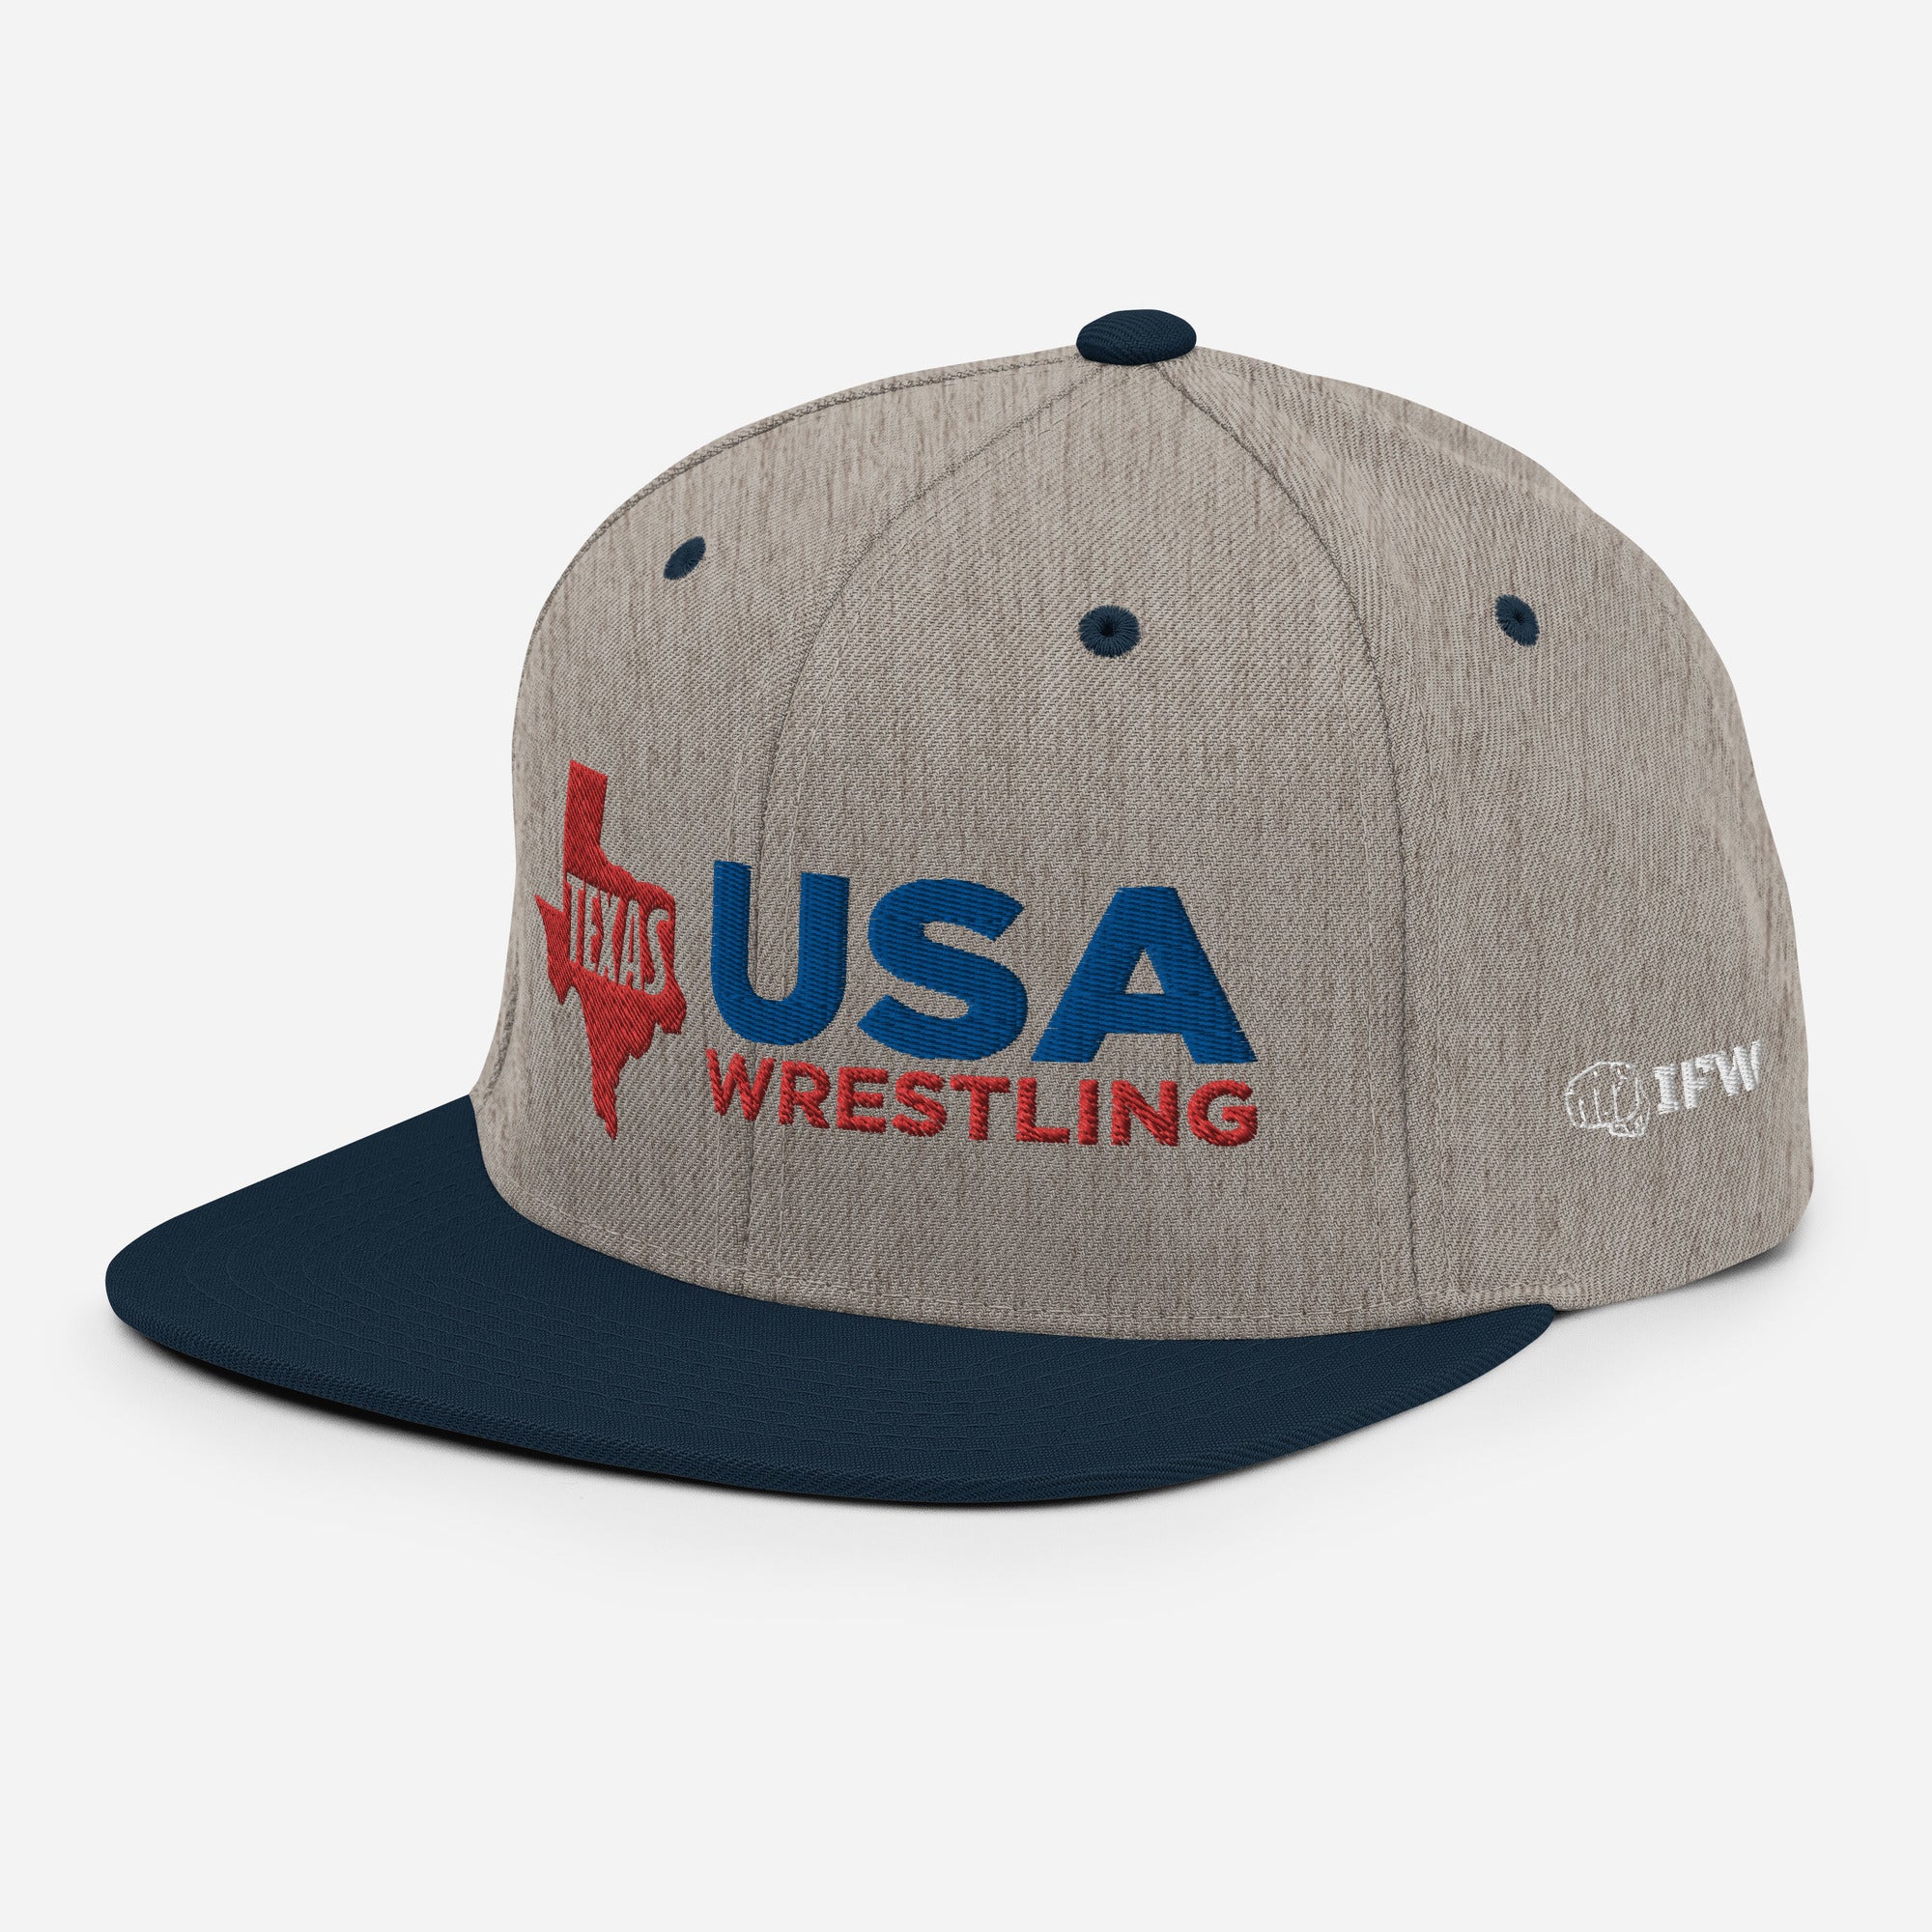 Texas USA Wrestling Snapback Hat